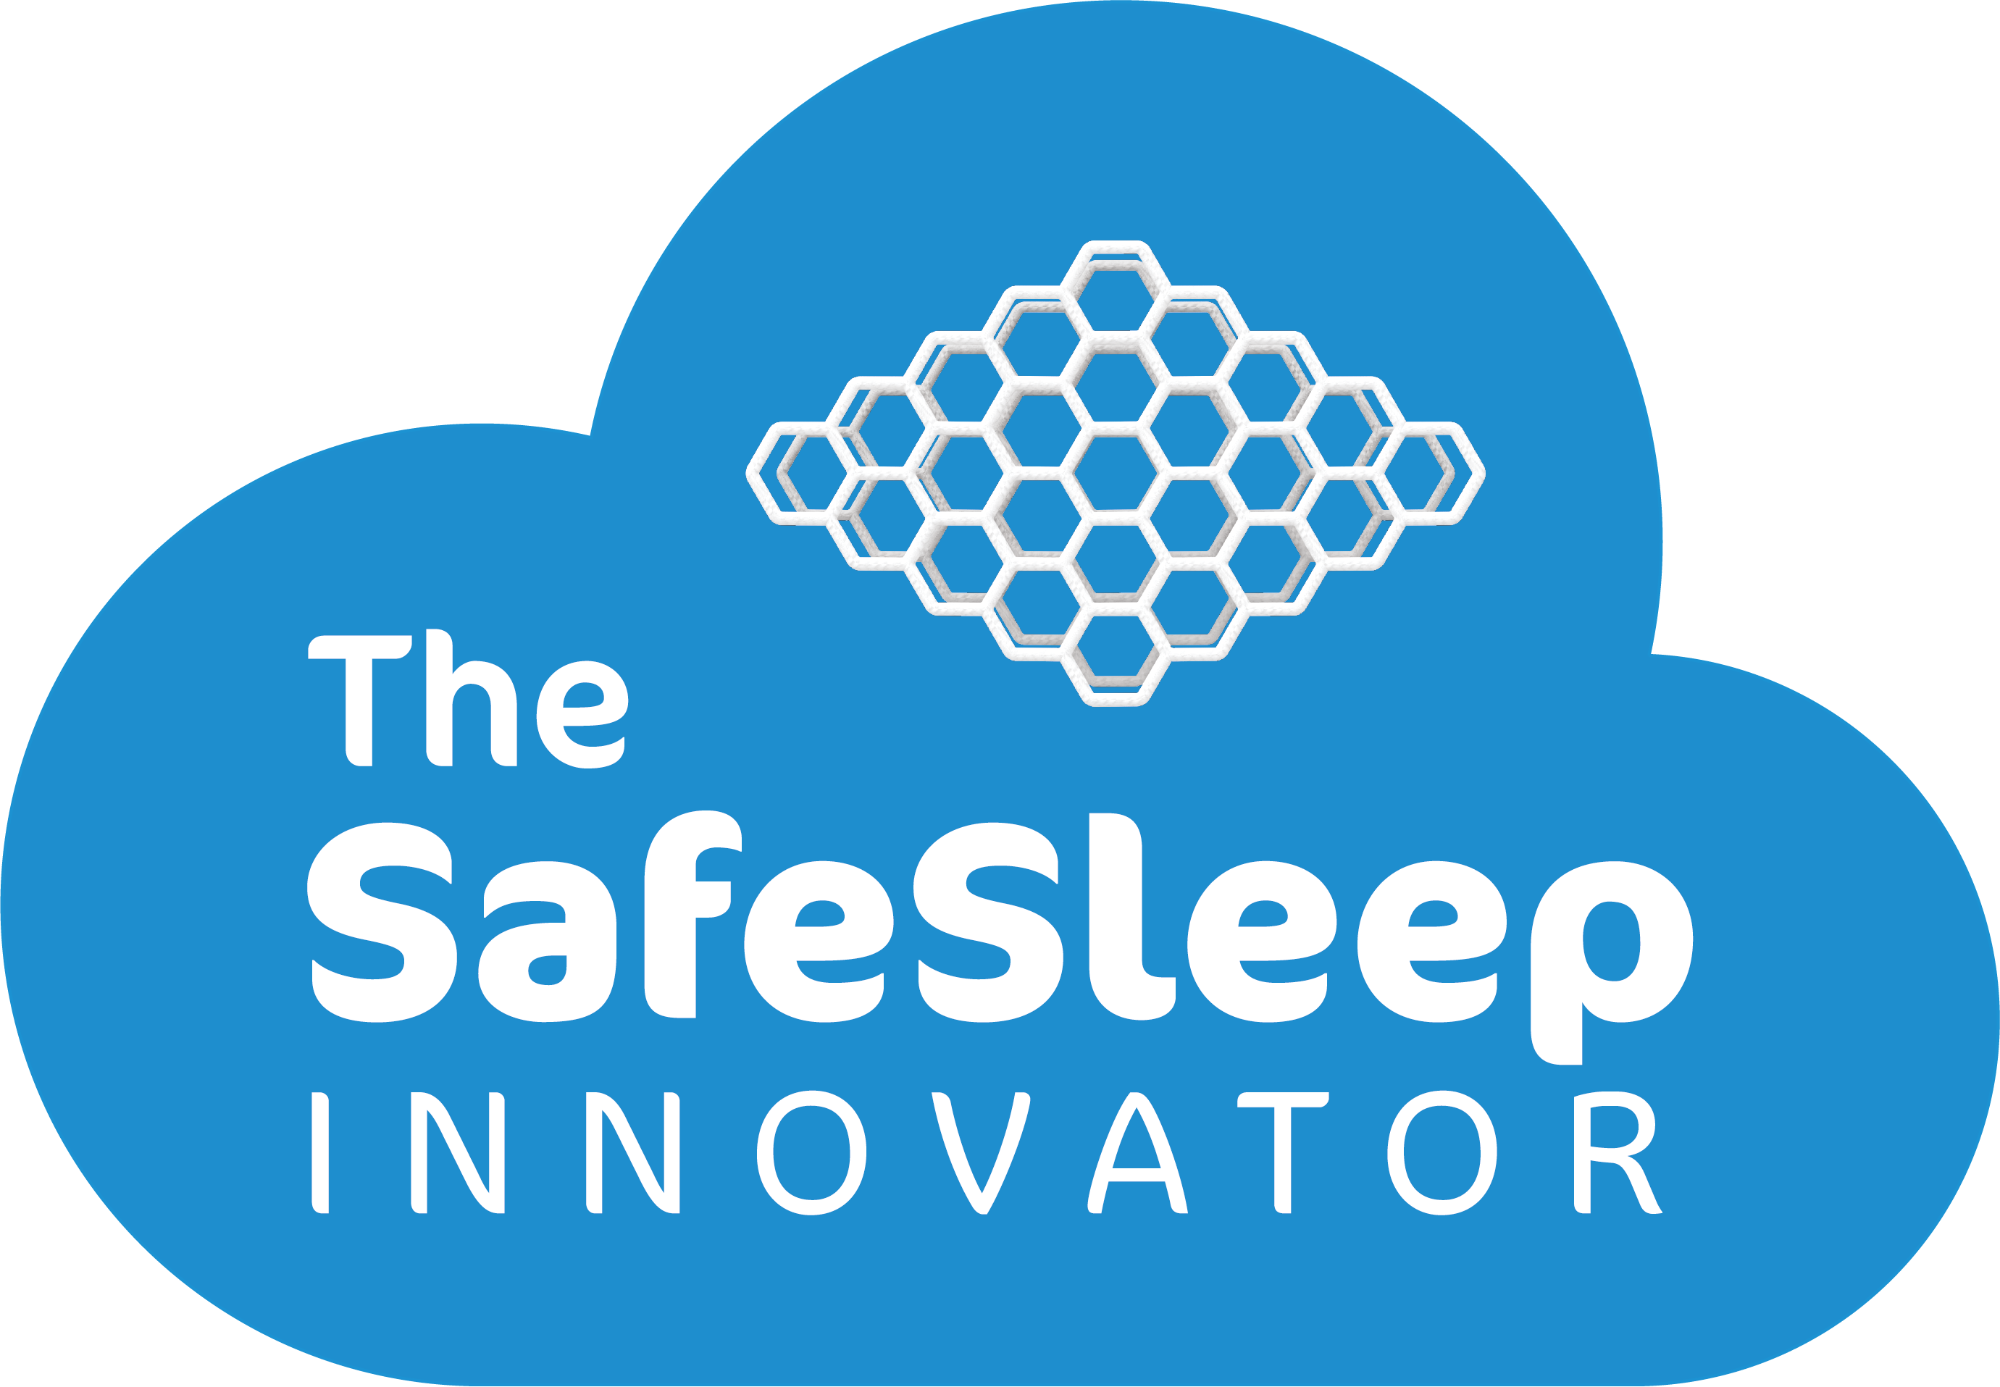 The SafeSleep Innovator